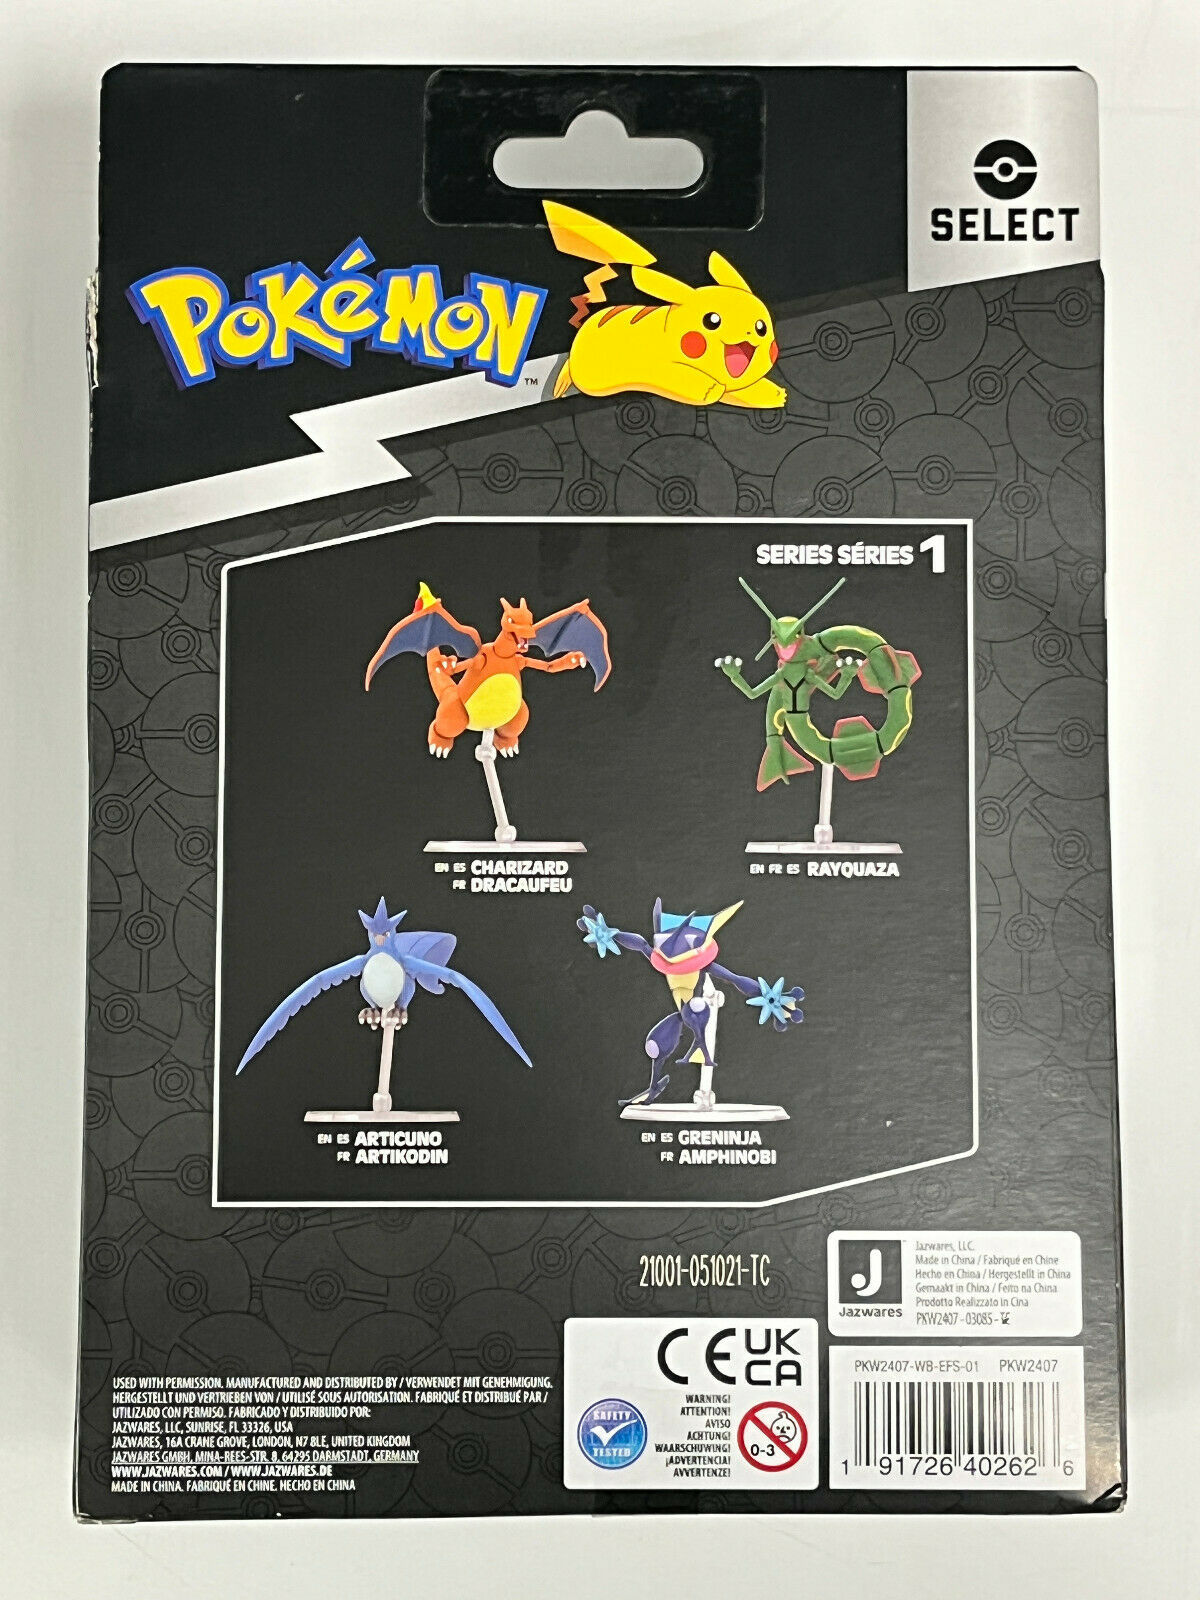 Pokémon Select Articulated Charizard Vinyl Figure NIP